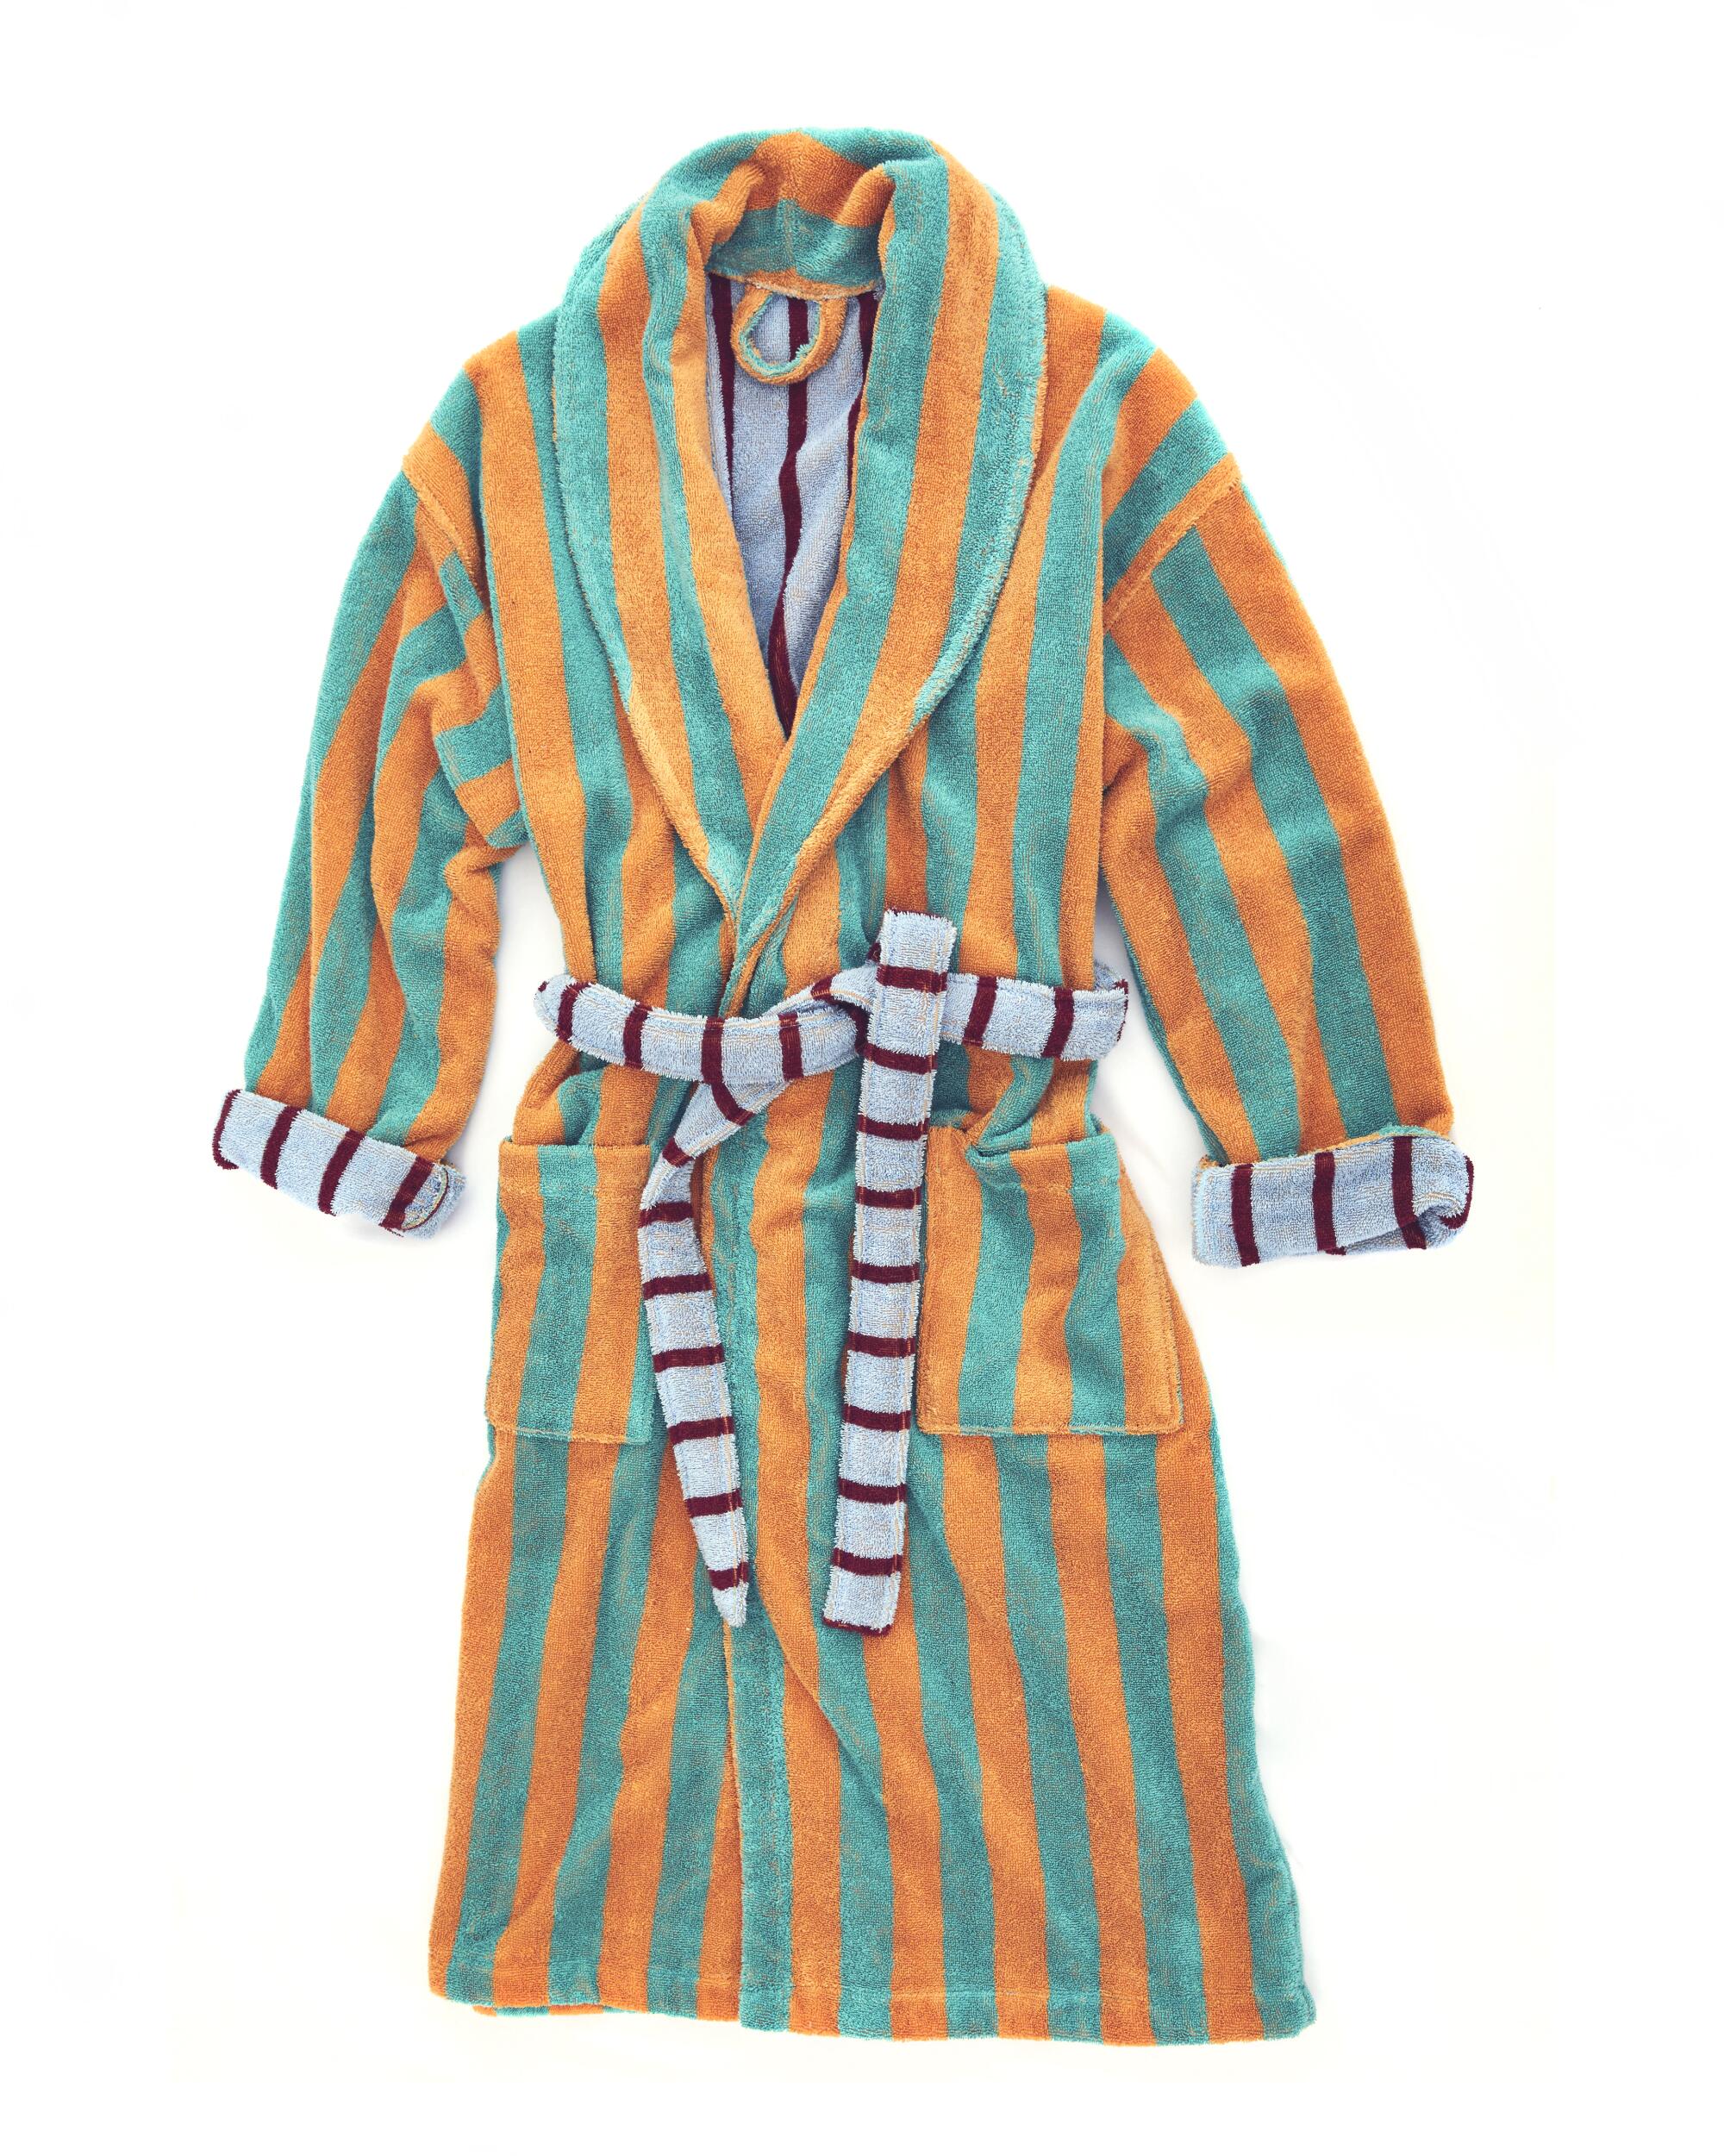 A bathrobe from Dusen Dusen